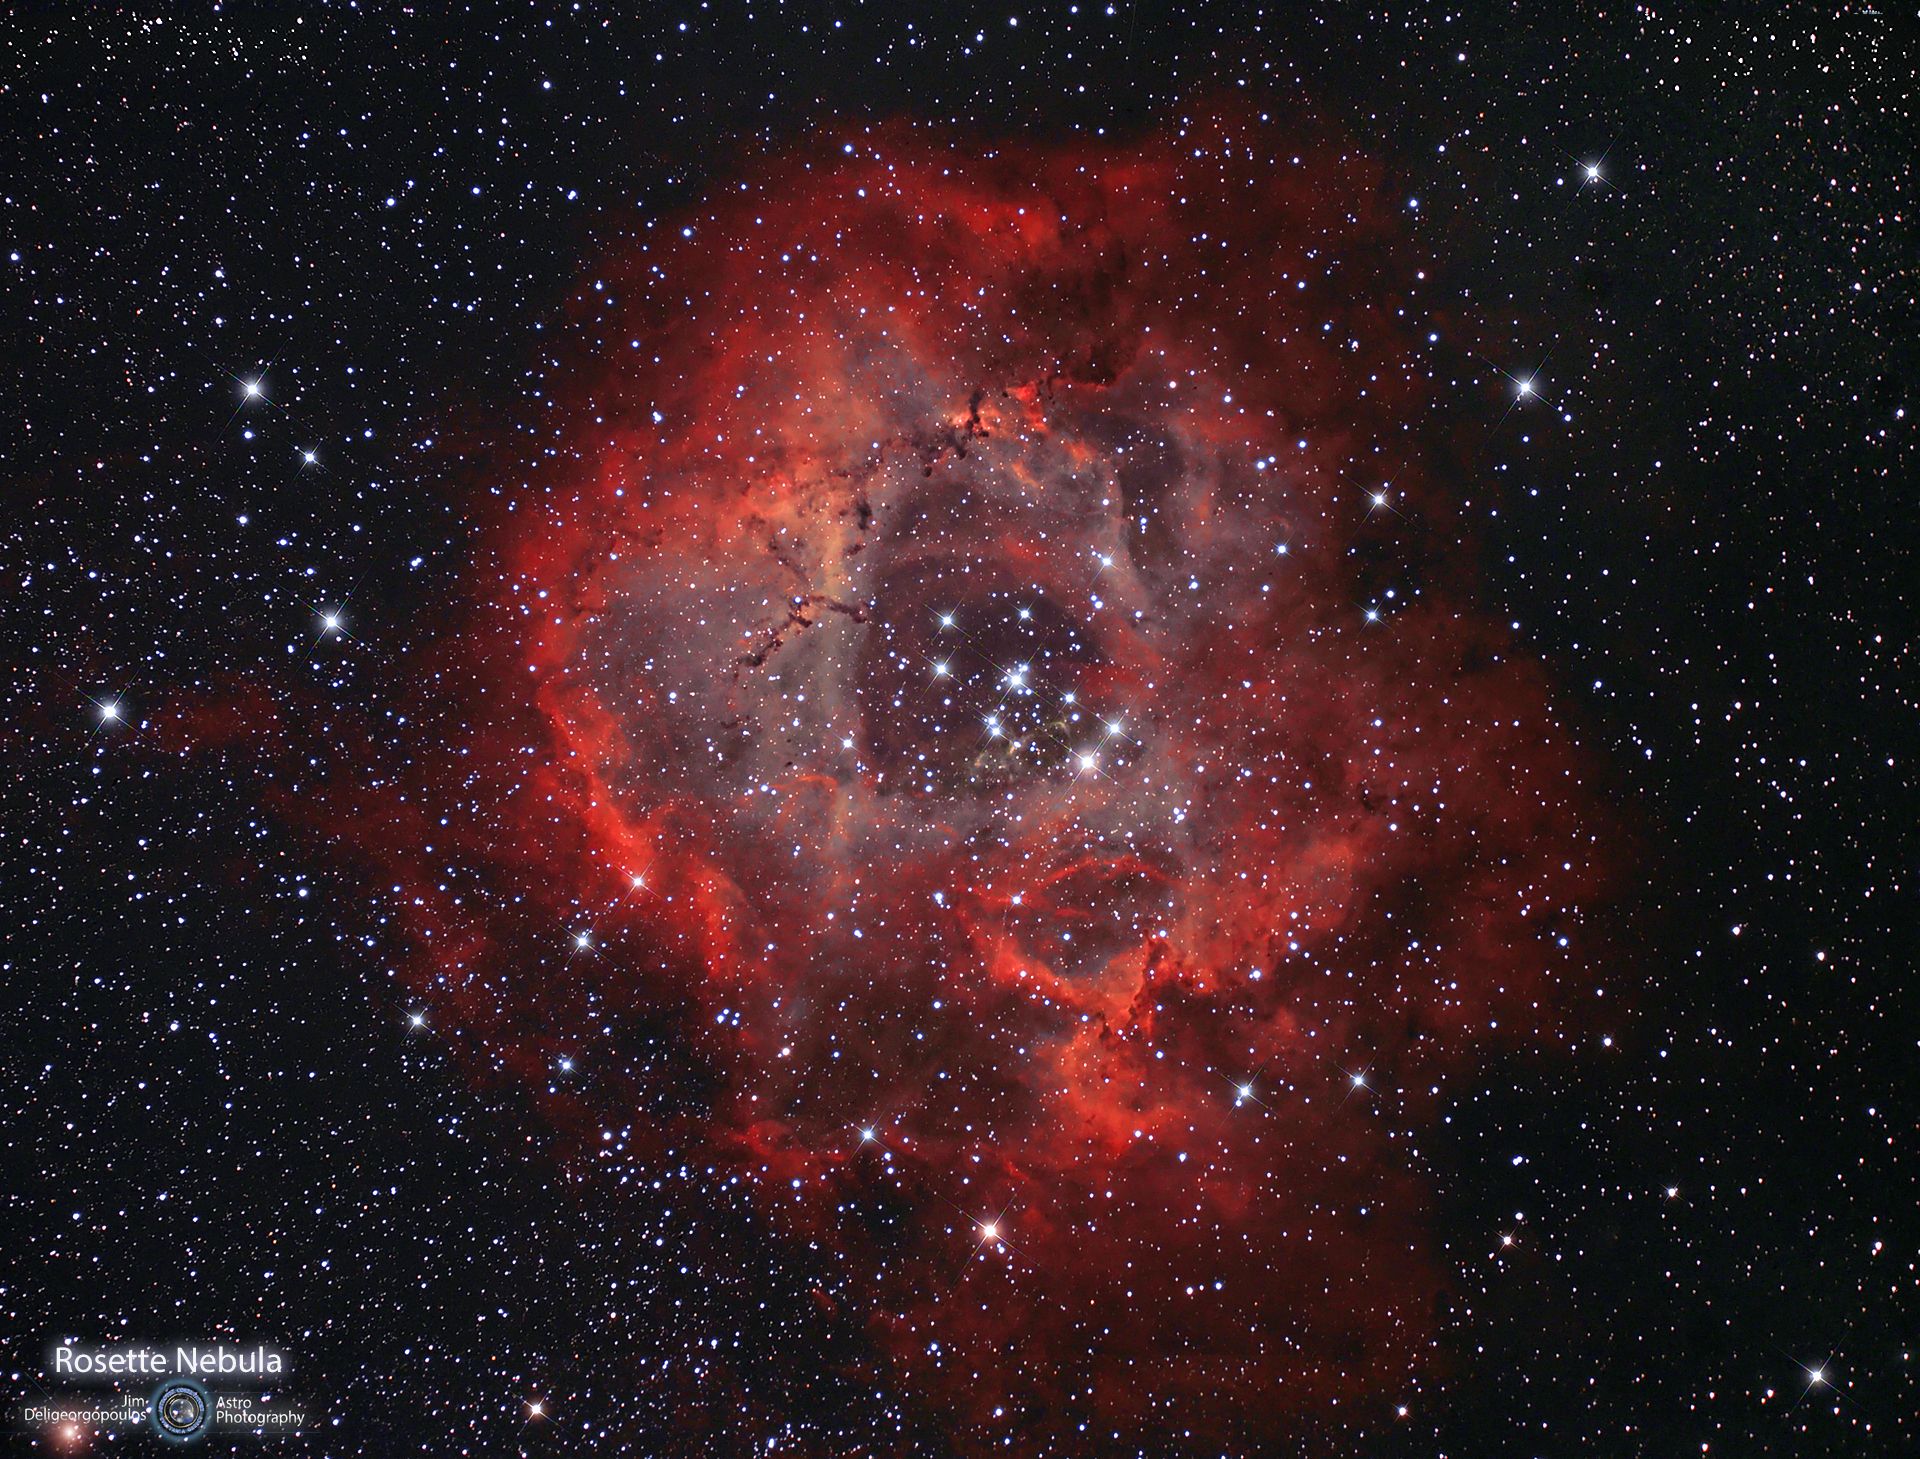 Rosette Nebula Dslr Edition 2015-16